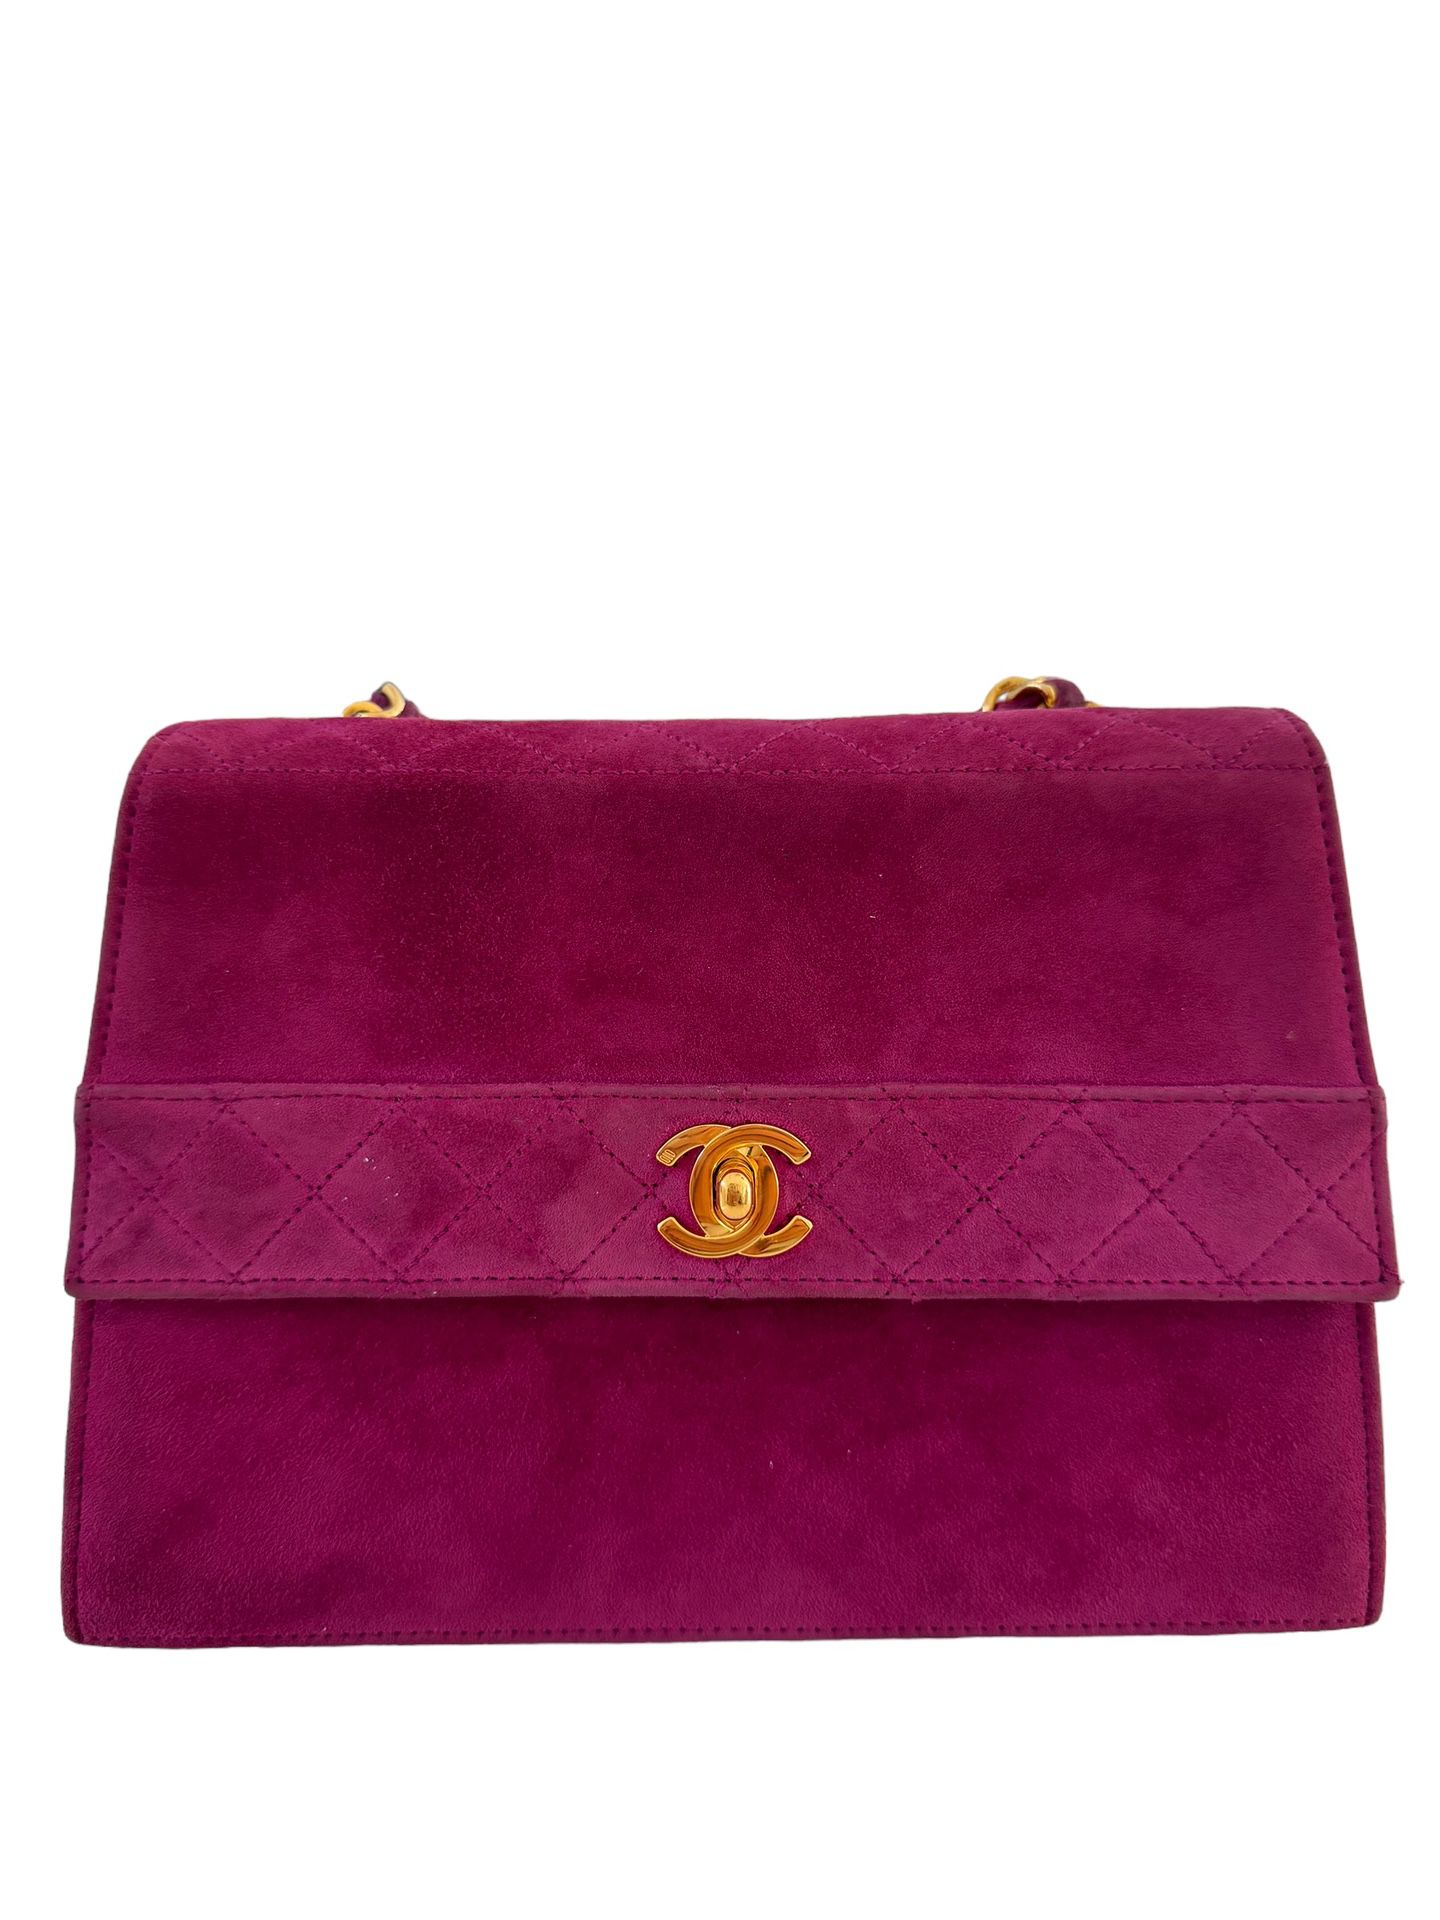 RARE Fuchsia Hot Pink Vintage Chanel Bag 24k Gold Hardware